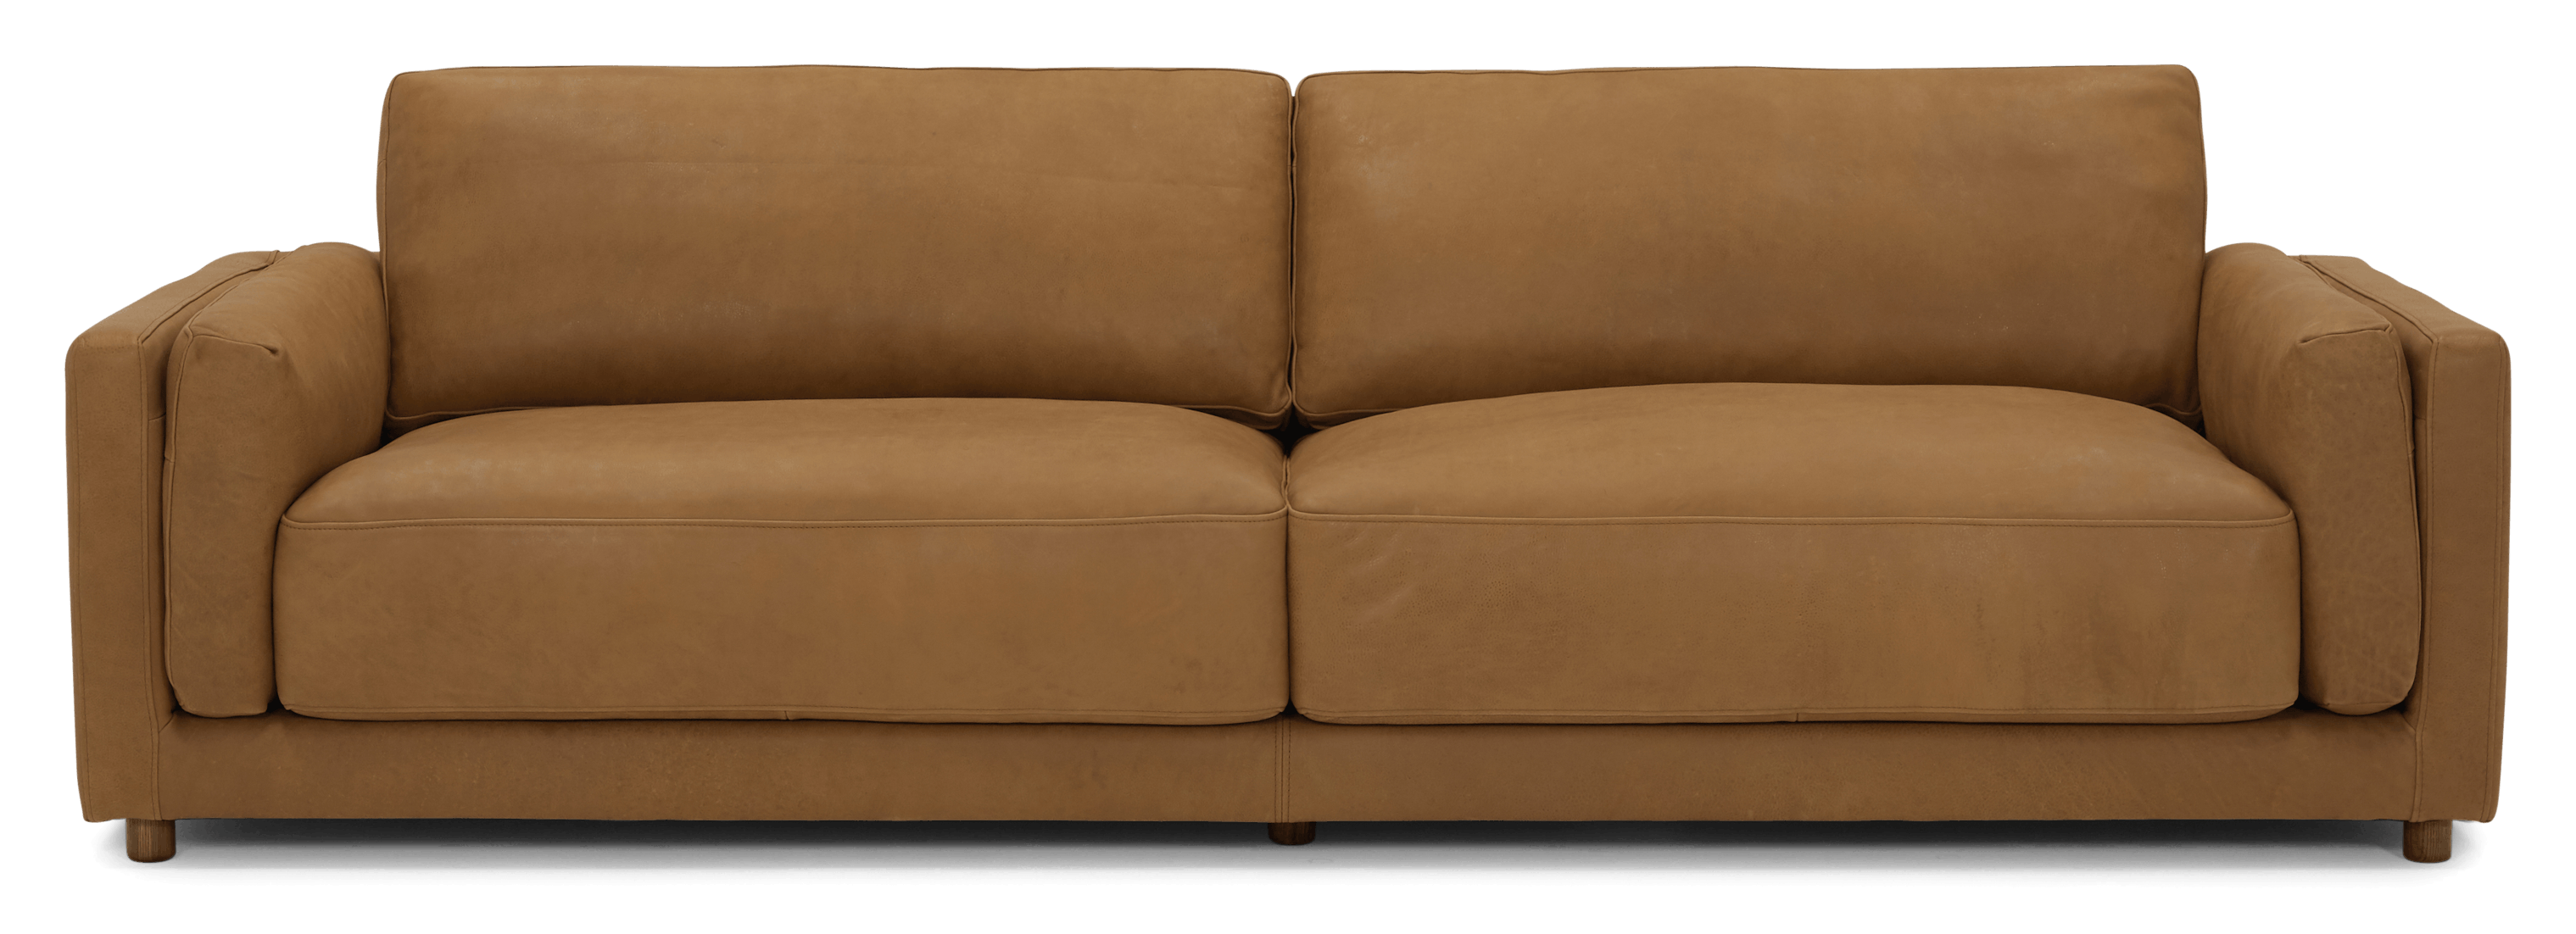 henri sofa fabric leather combination